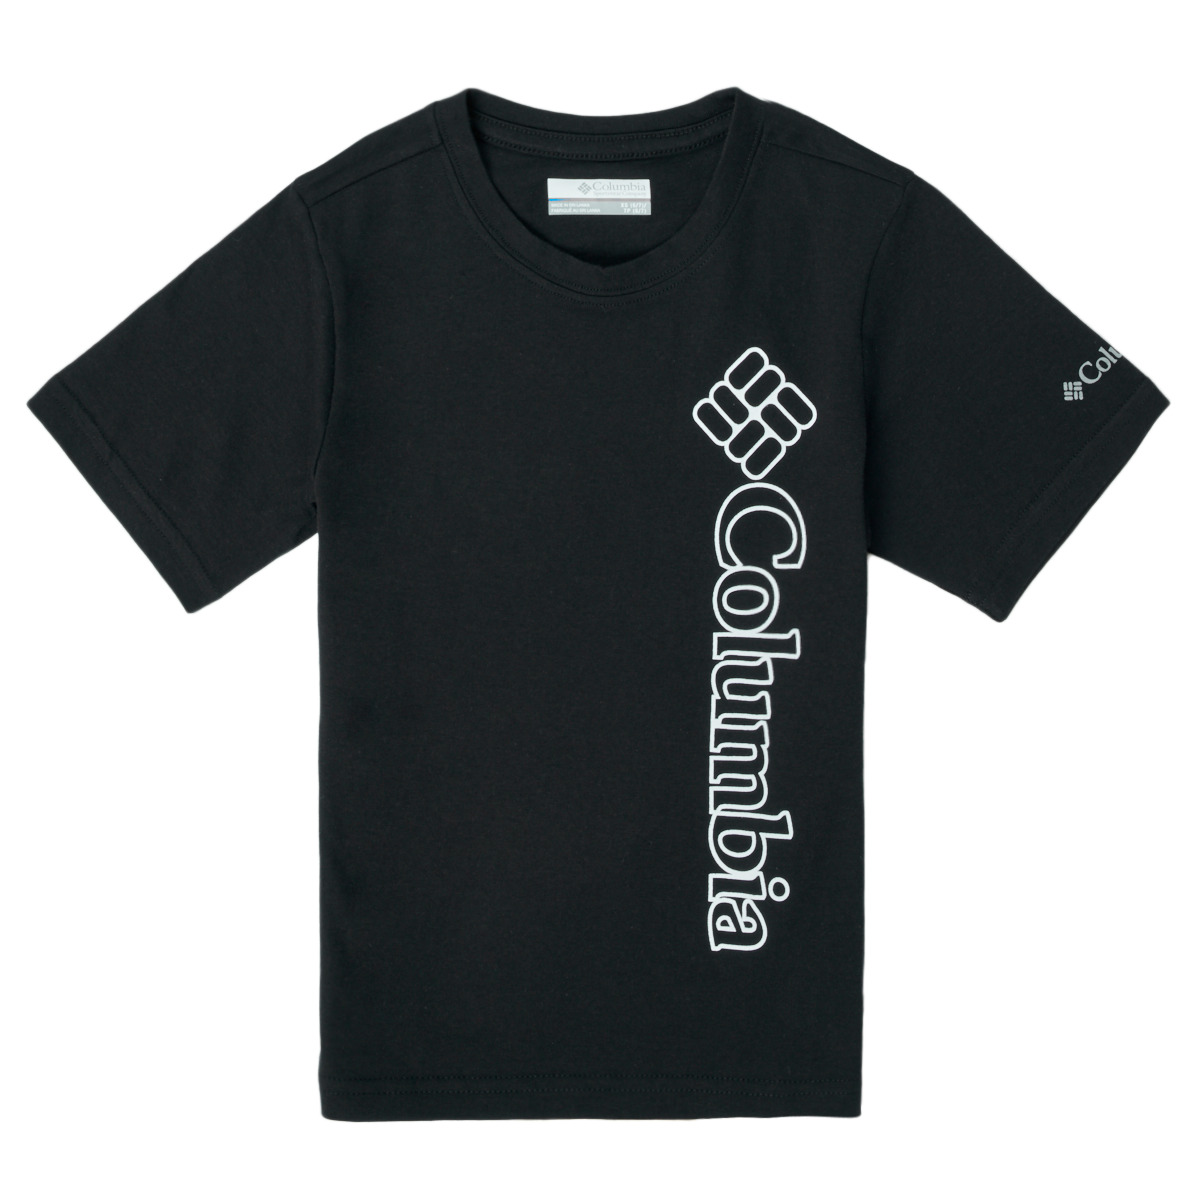 Clothing Boy Short-sleeved t-shirts Columbia HAPPY HILLS GRAPHIC Black